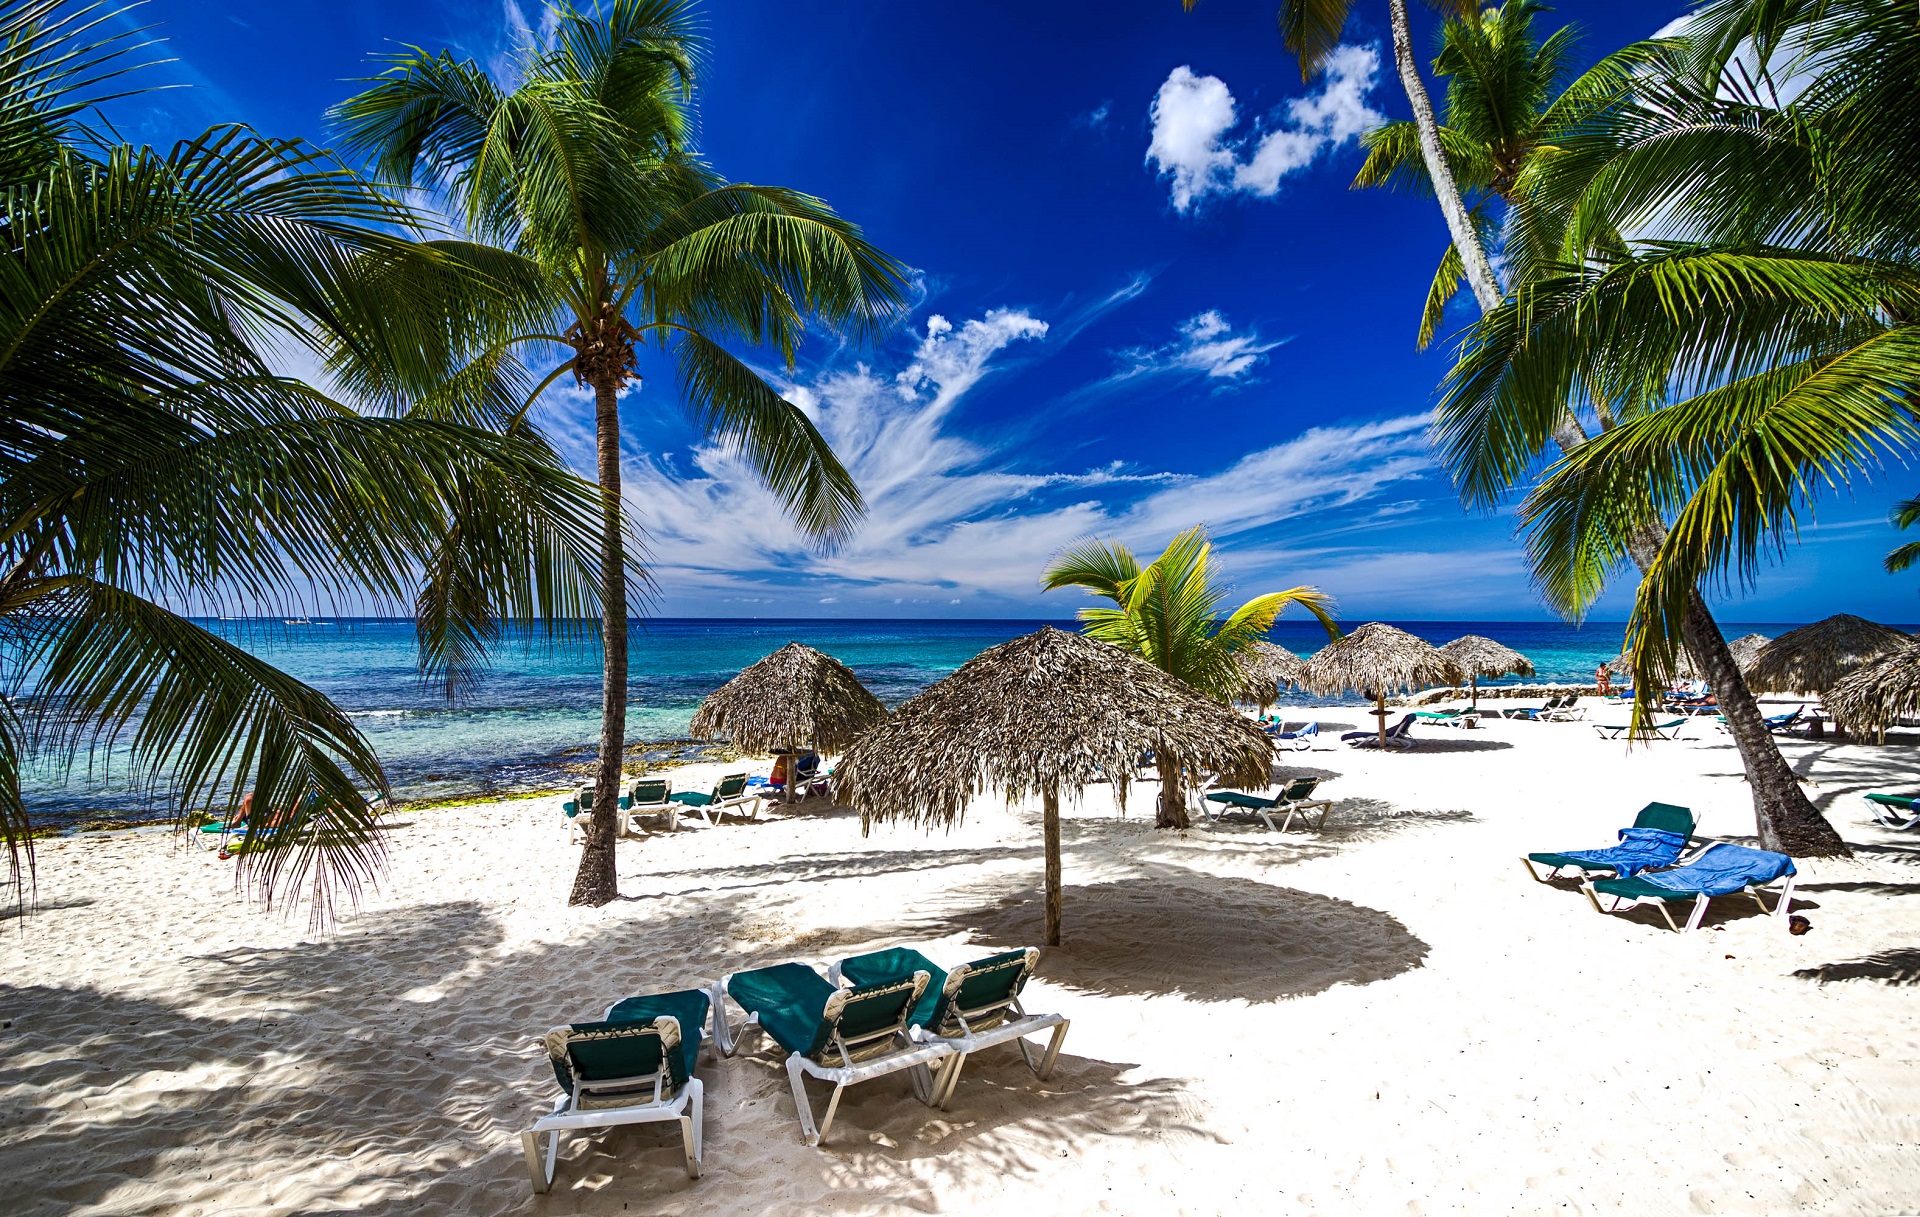 Beautiful Caribbean beach in Dominican Republic